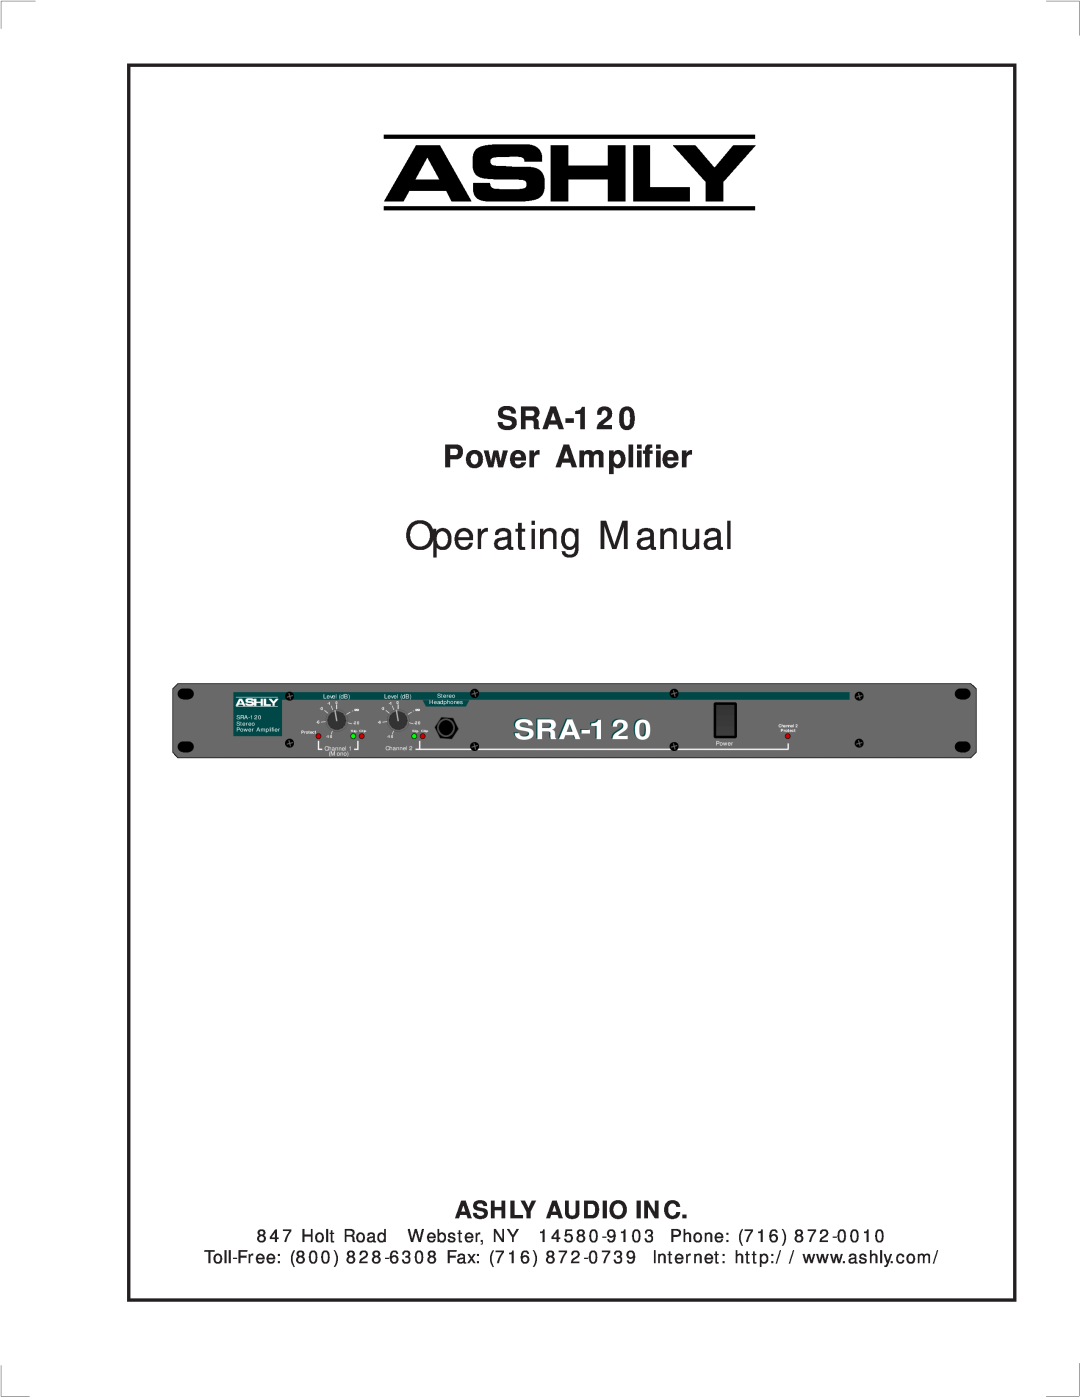 Ashly SRA-120 manual Operating Manual, Power Amplifier, Ashly Audio Inc, Holt Road, Webster, NY, Phone, Level dB, Stereo 